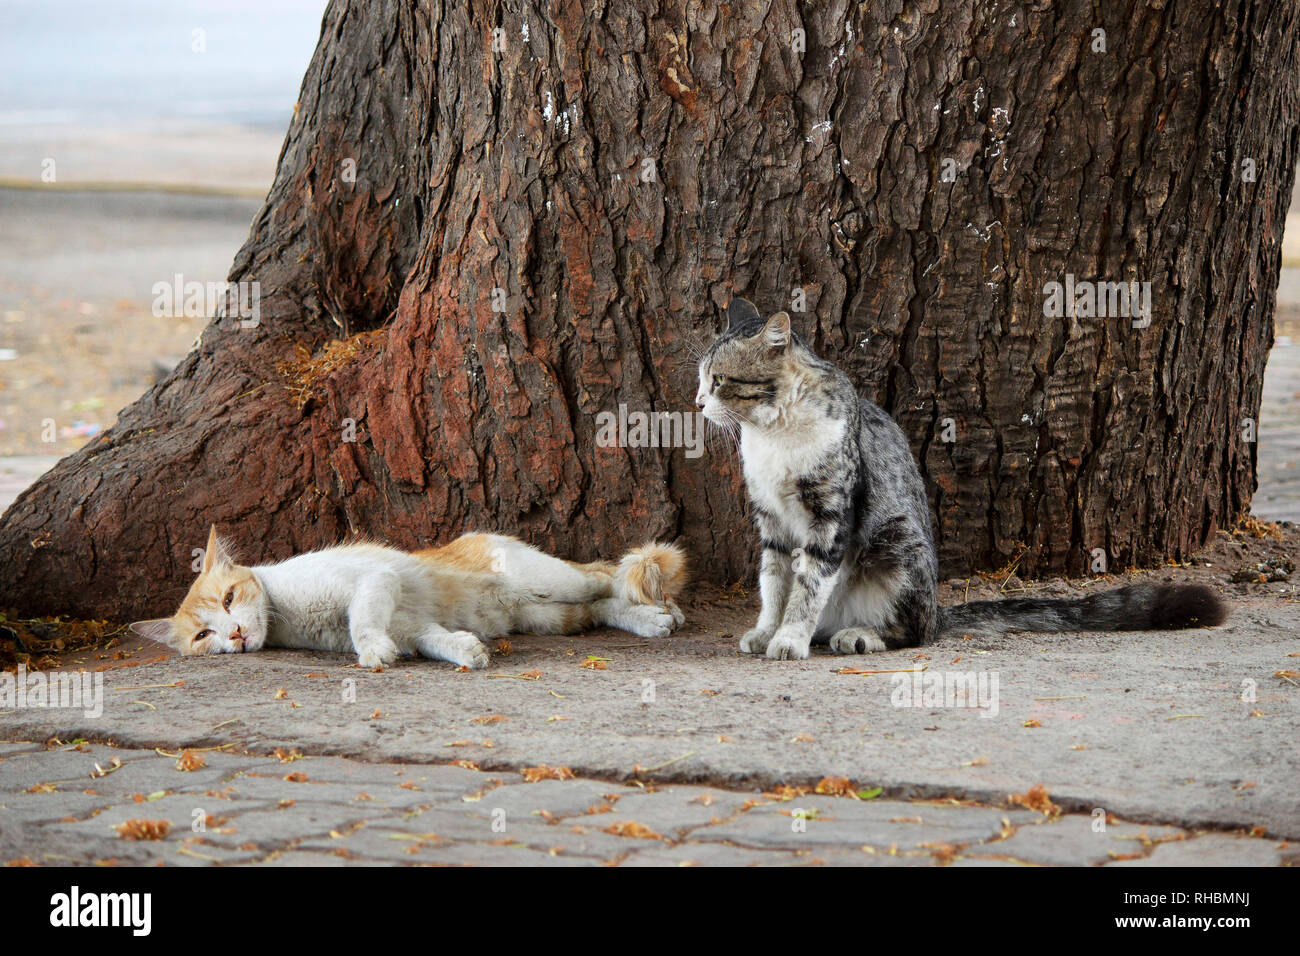 Two cats resting on tree trunk, Pune, Maharashtra, India Stock Photo